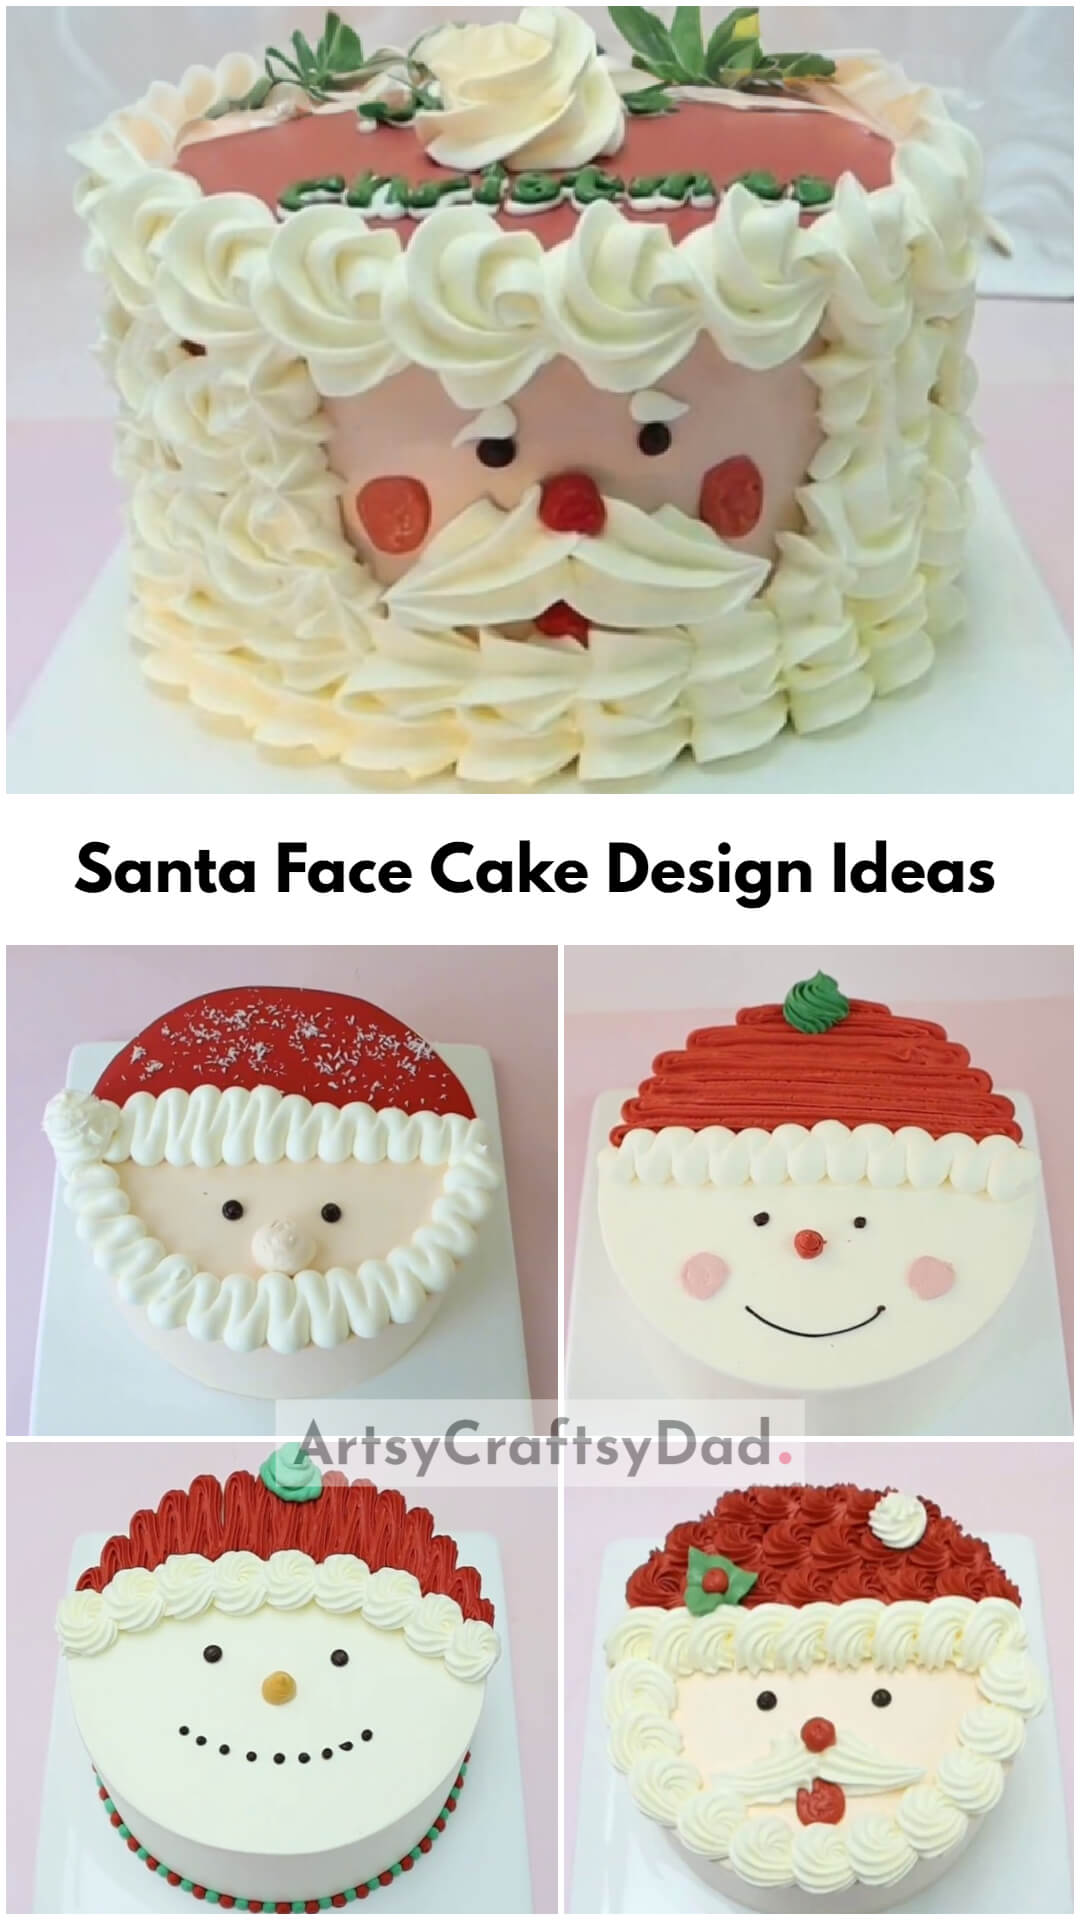 Santa Face Cake Design Ideas For Christmas